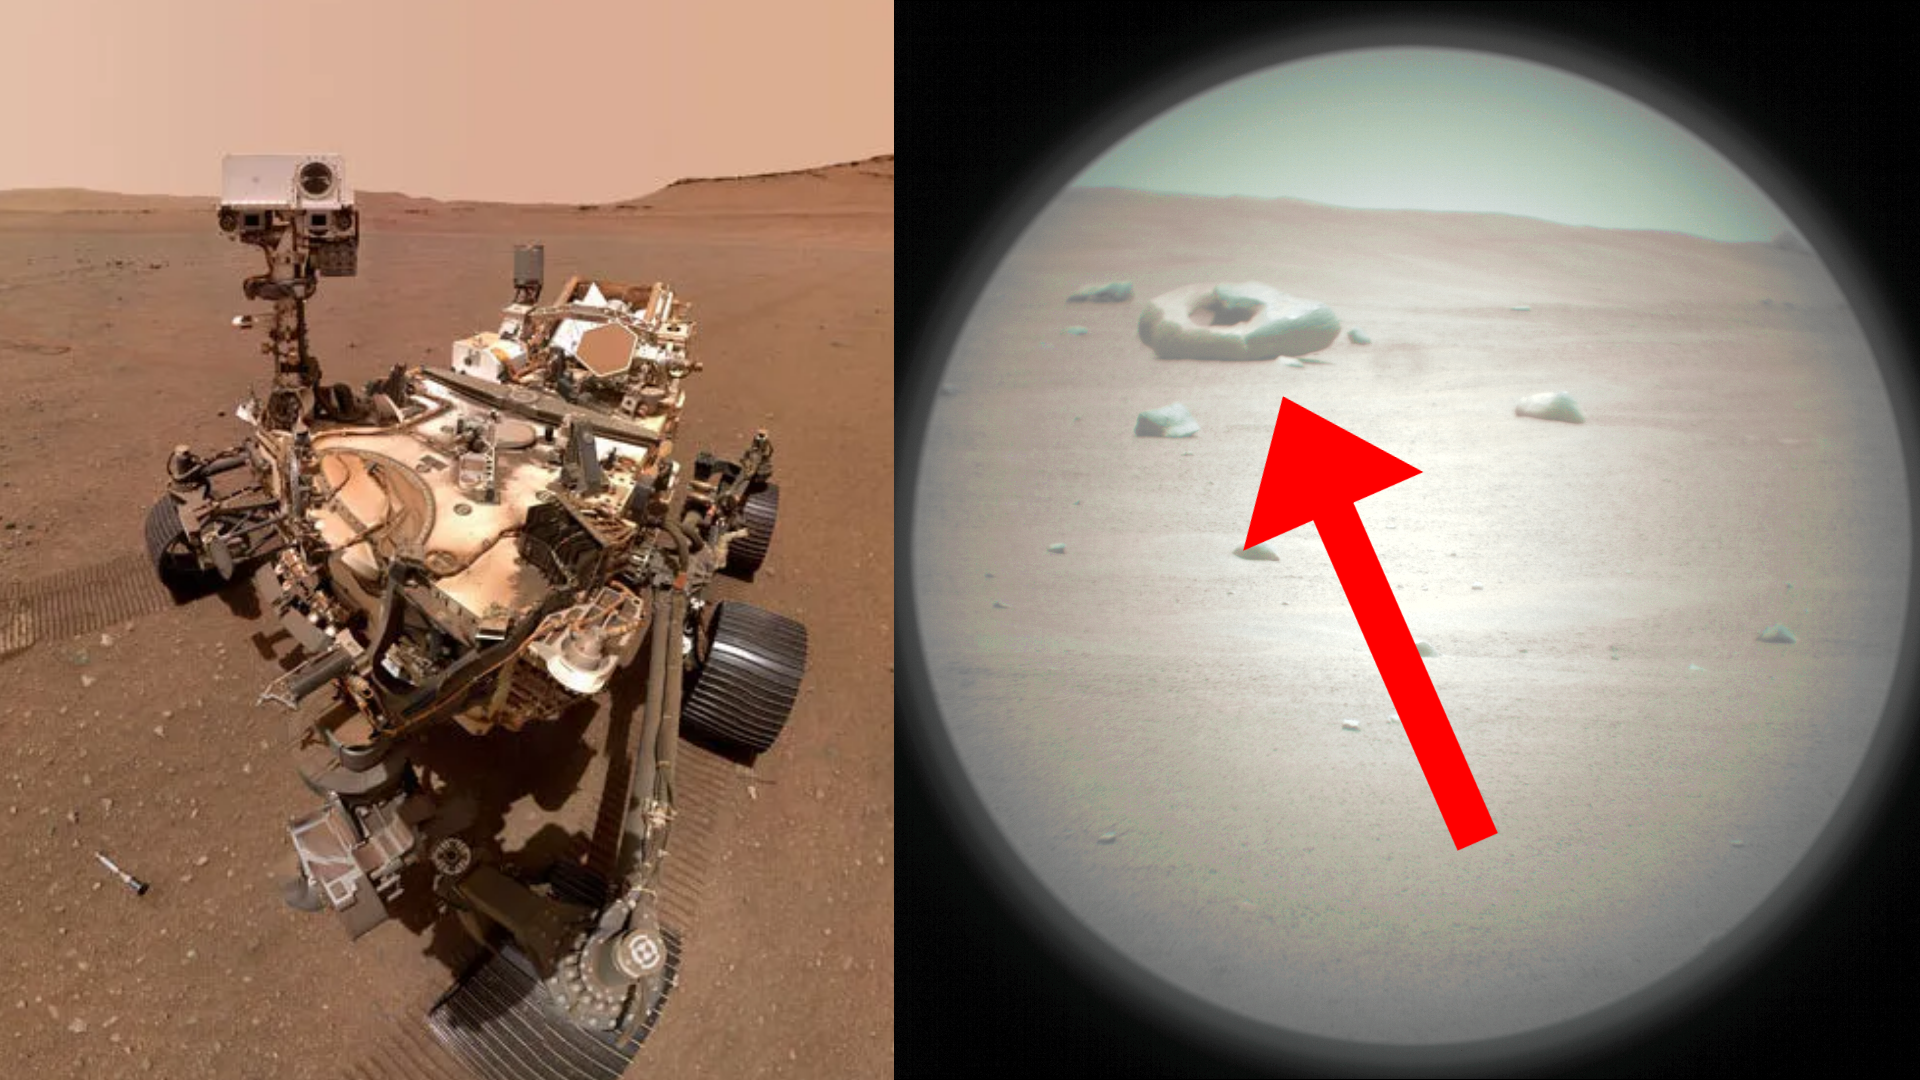 NASA rover finds strange doughnut-shaped rock on Mars